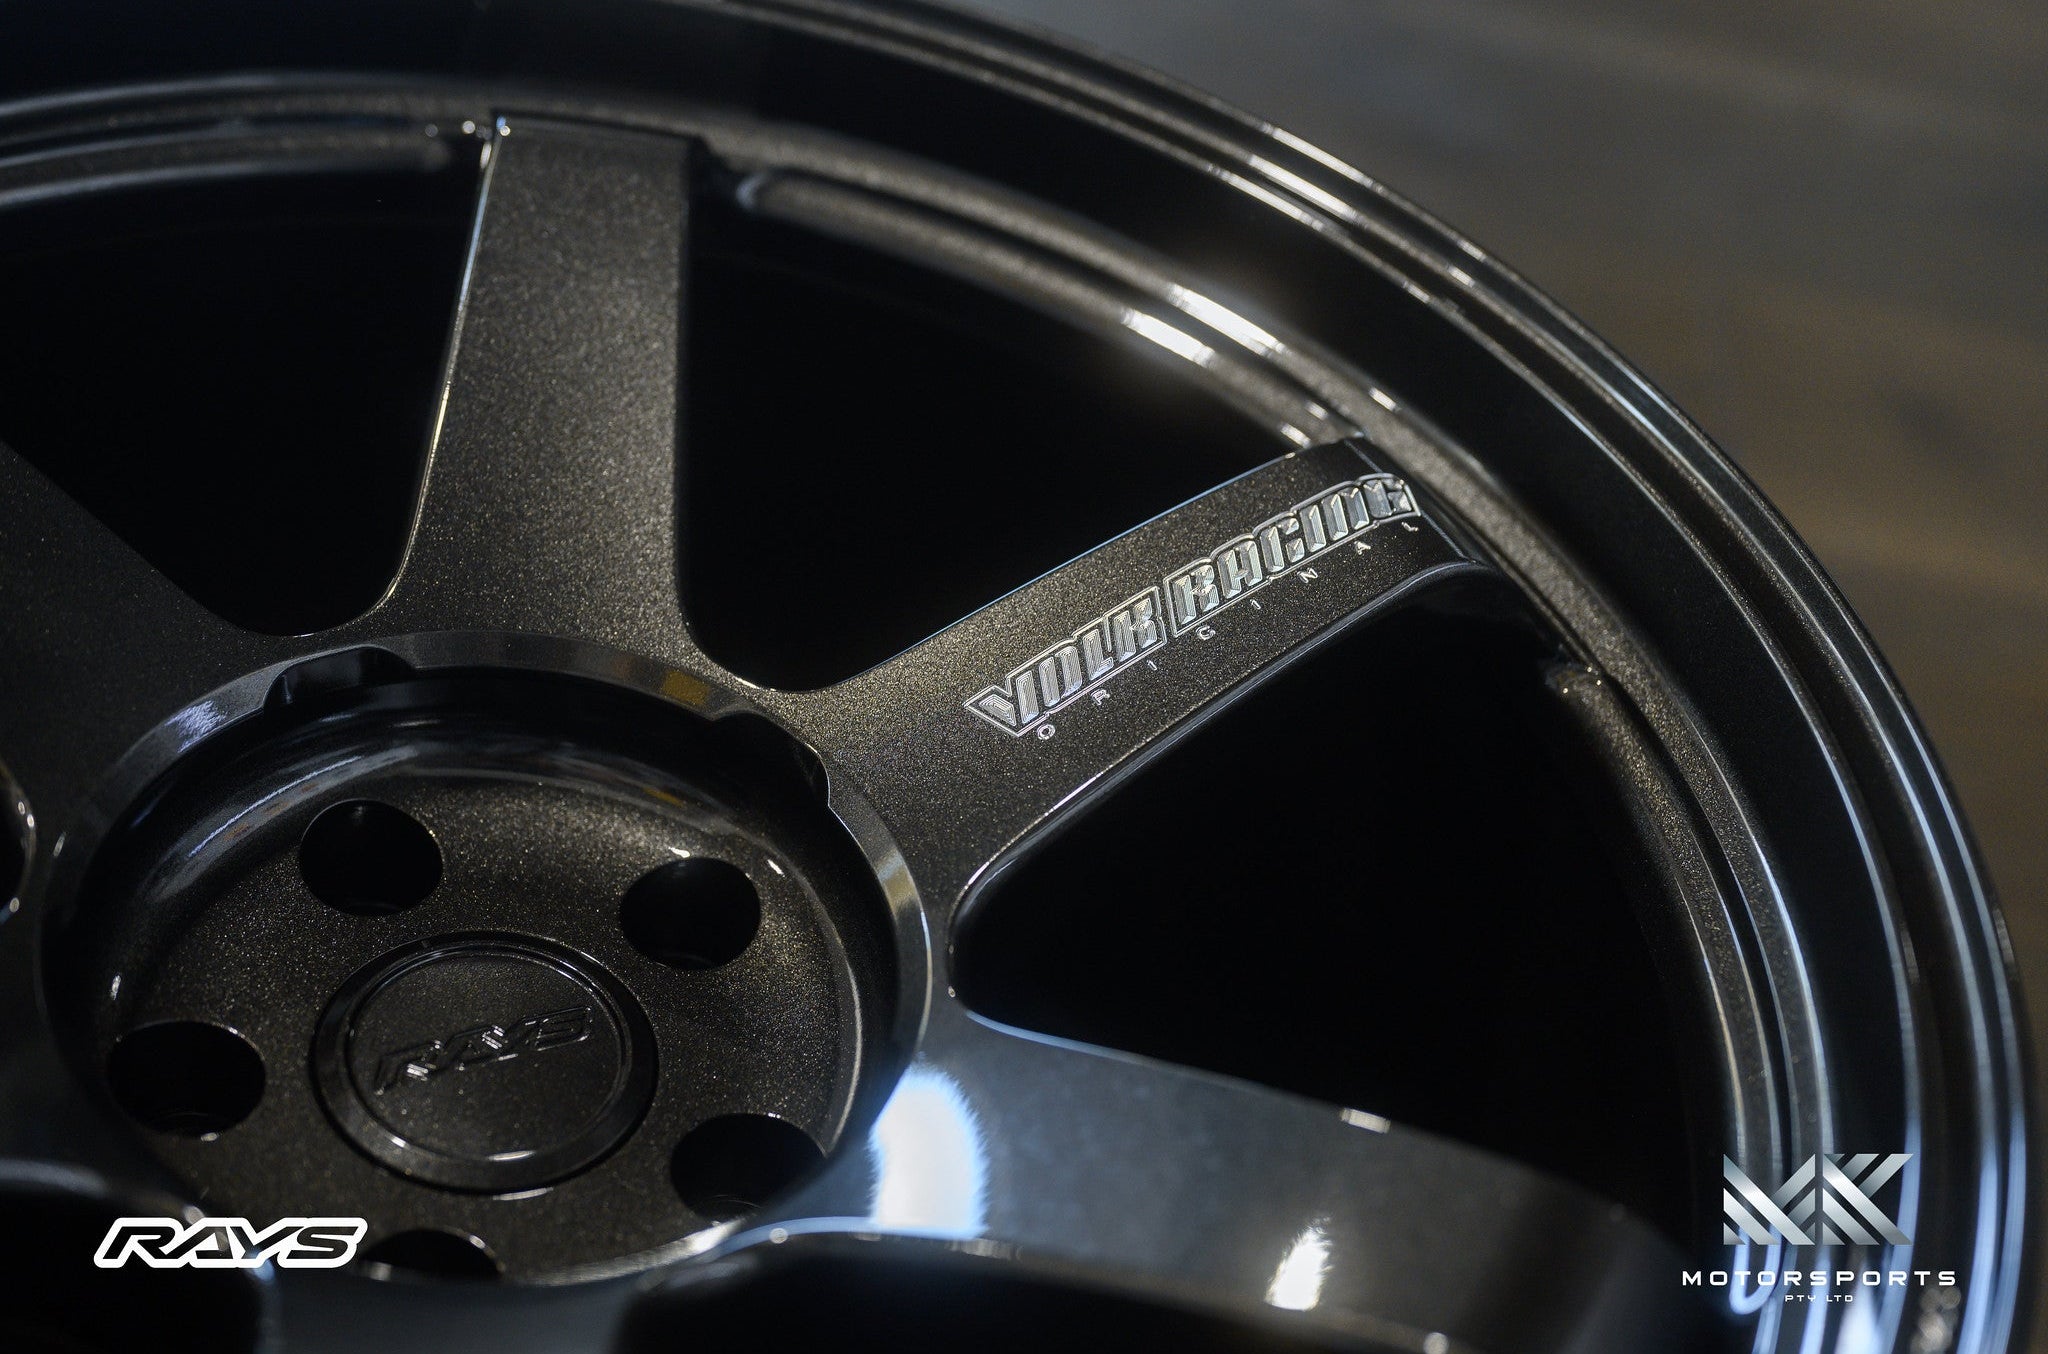 Volk Racing TE37 Ultra M-Spec R35 GT-R - Premium Wheels from Volk Racing - From just $6490.00! Shop now at MK MOTORSPORTS